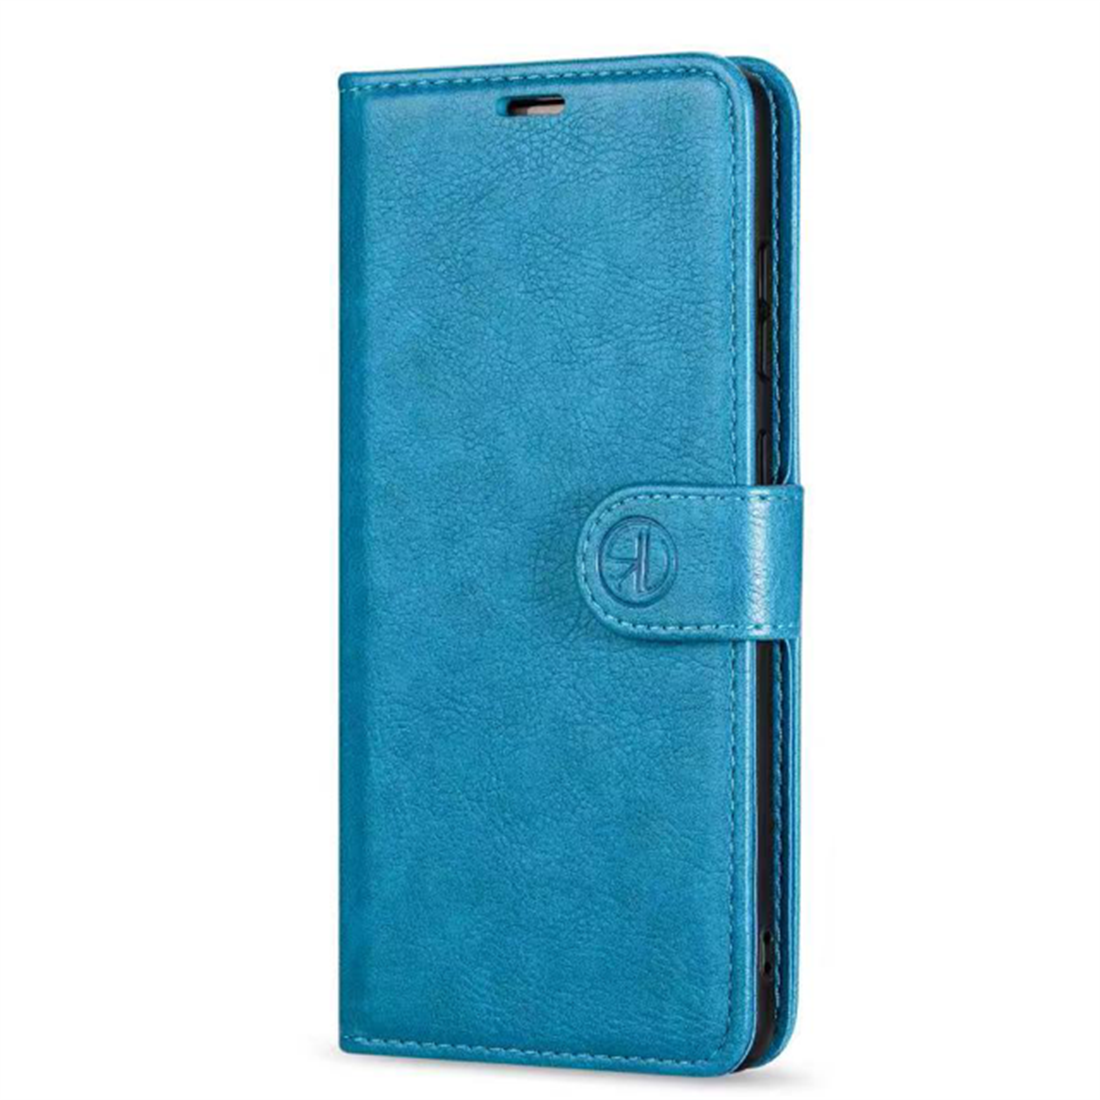 Apple iPhone 11 artificial leather Light Blue Book Case